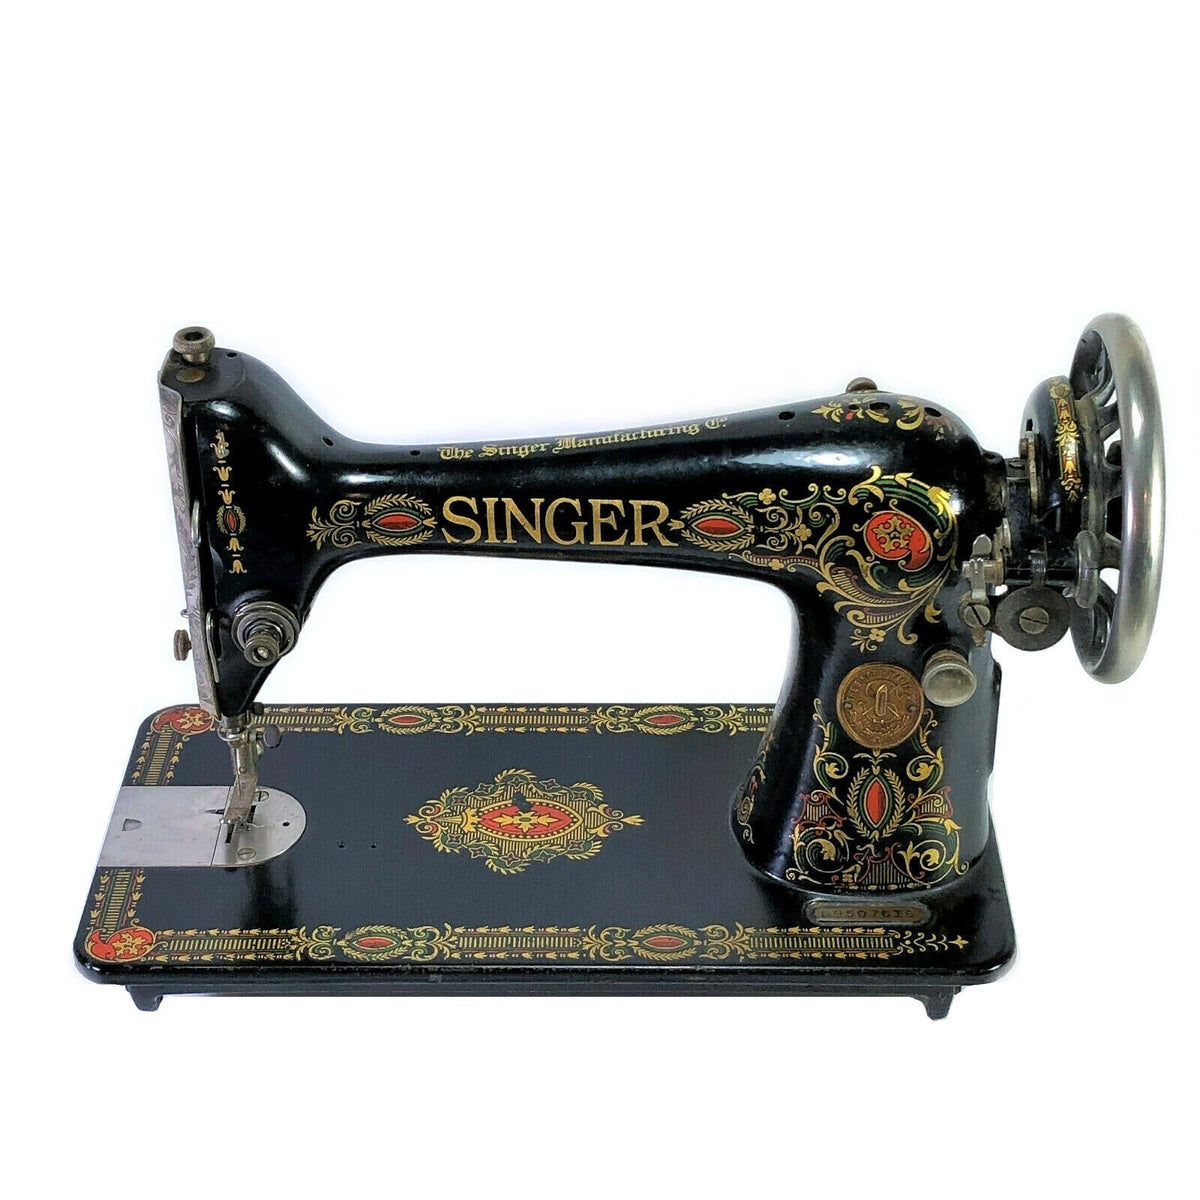 Singer Red Band Type 2020 100/16 Sewing Machine Needles